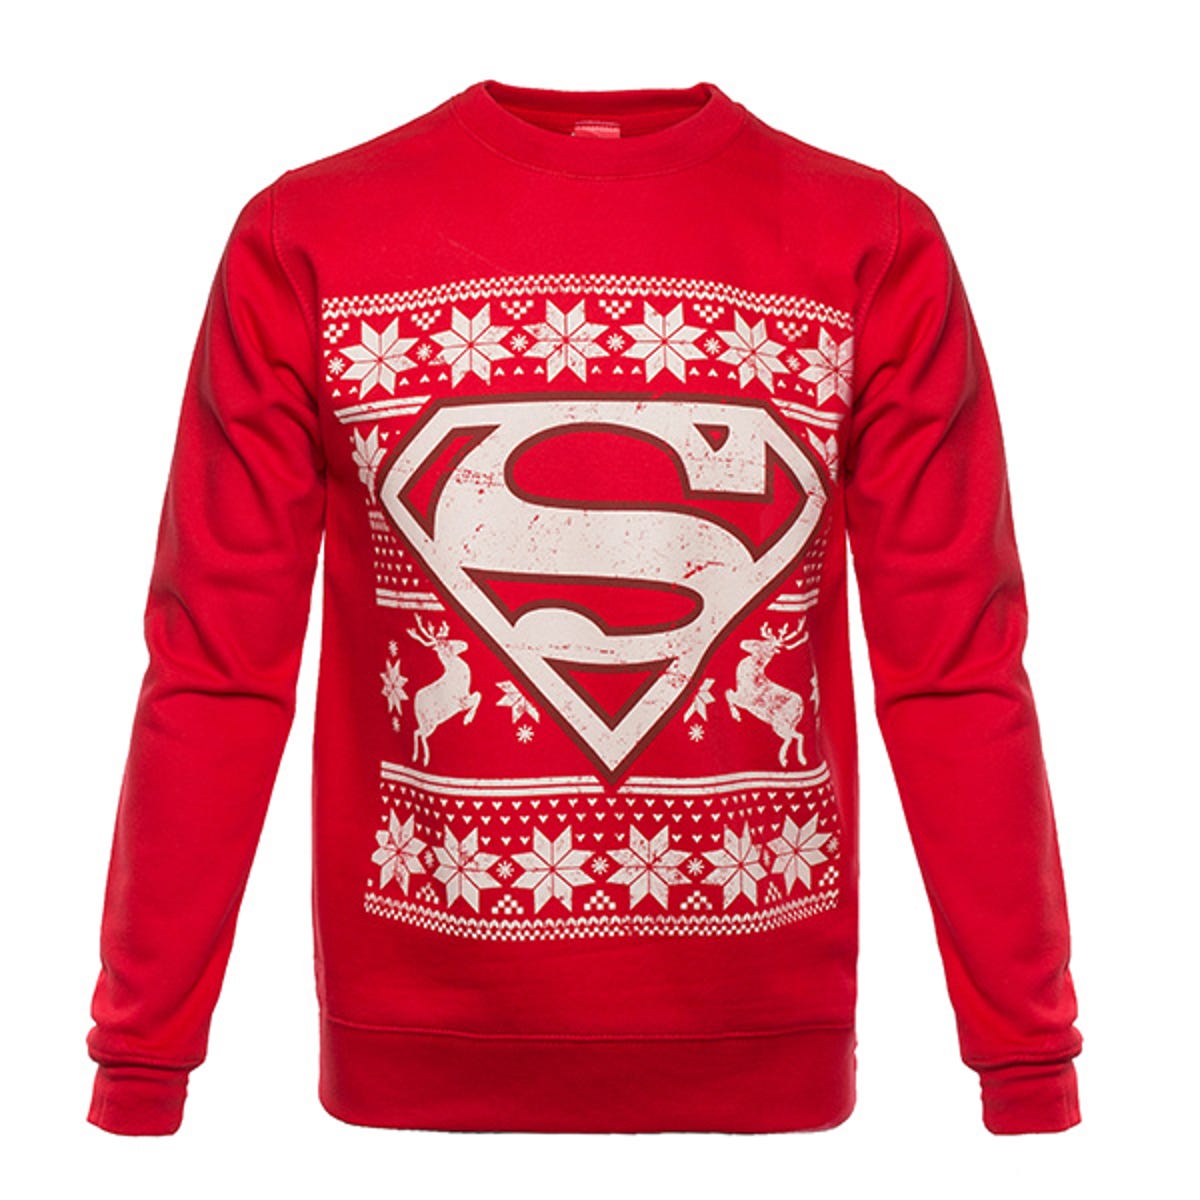 Superman Christmas sweater